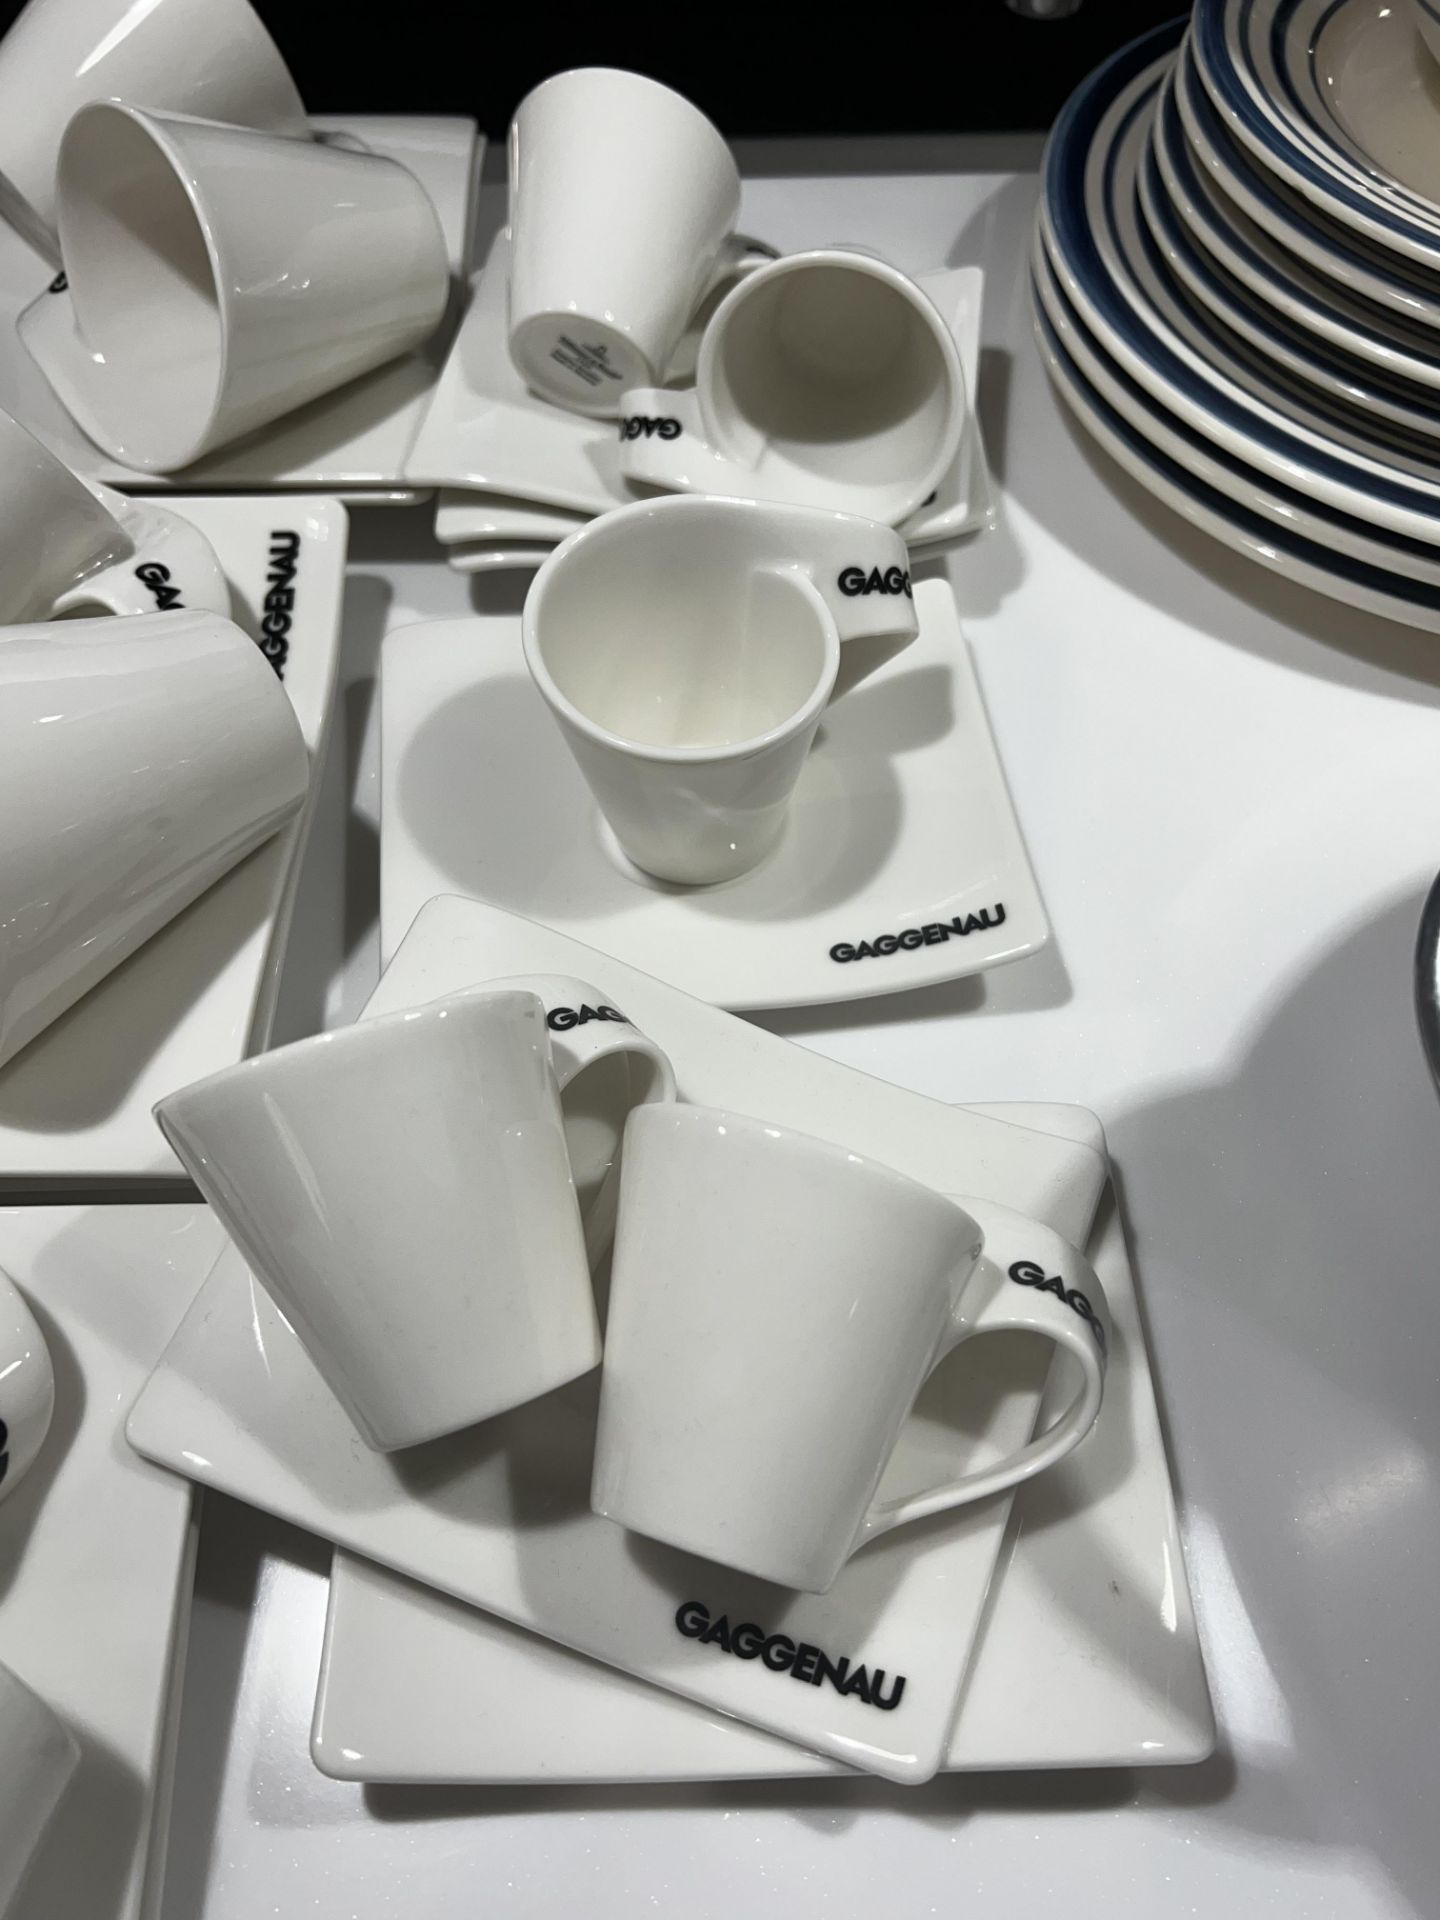 Gaggenau espresso & coffee mugs - Image 2 of 3